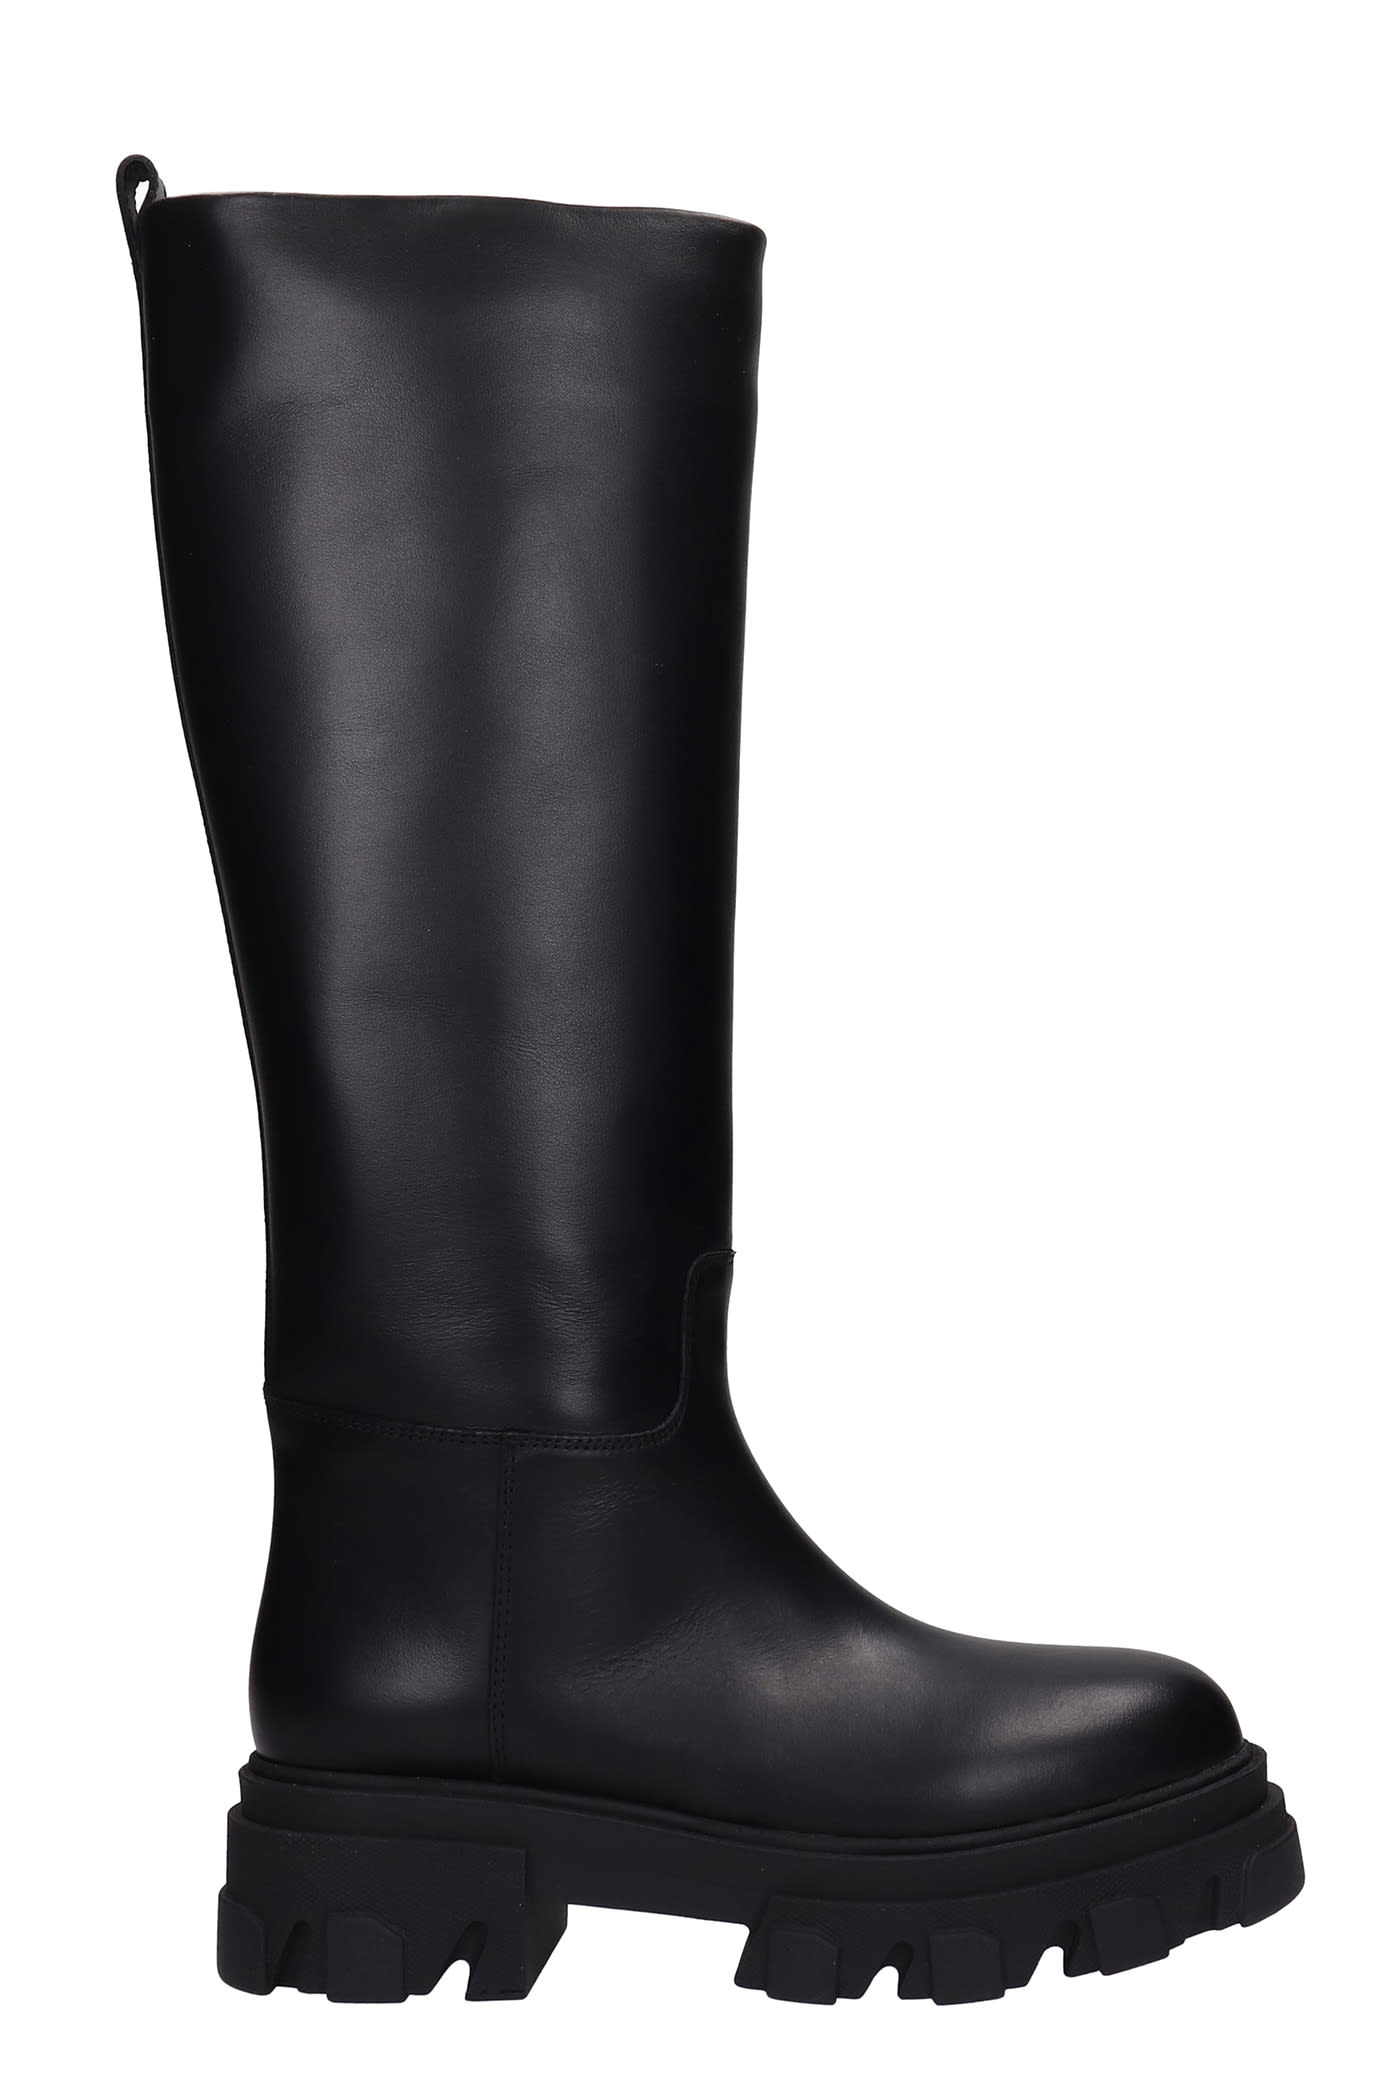 Gia X Pernille Teisbaek Perni 07 Low Heels Boots In Black Leather